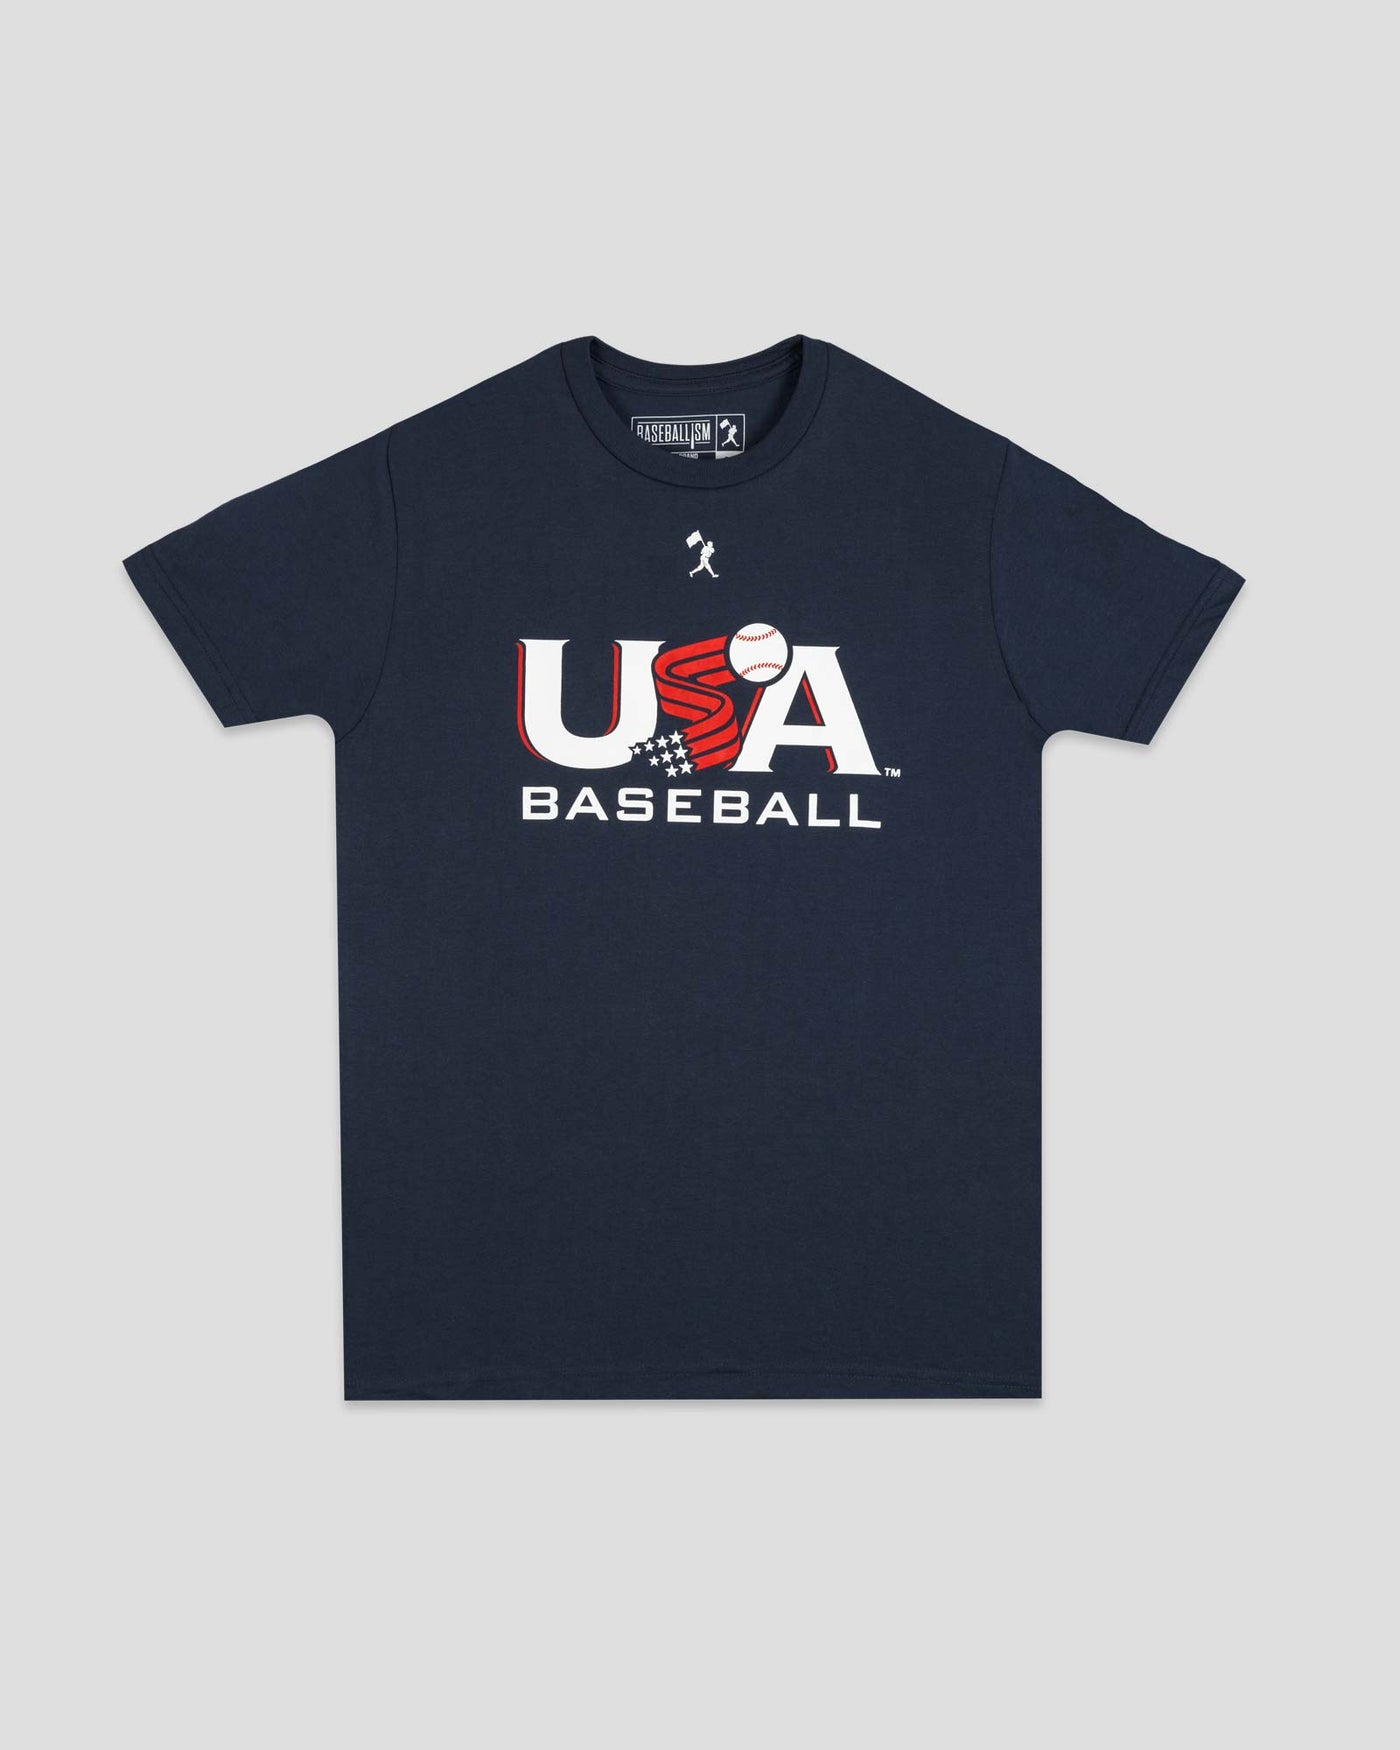 Baseballism x USA Baseball - Azul marino 